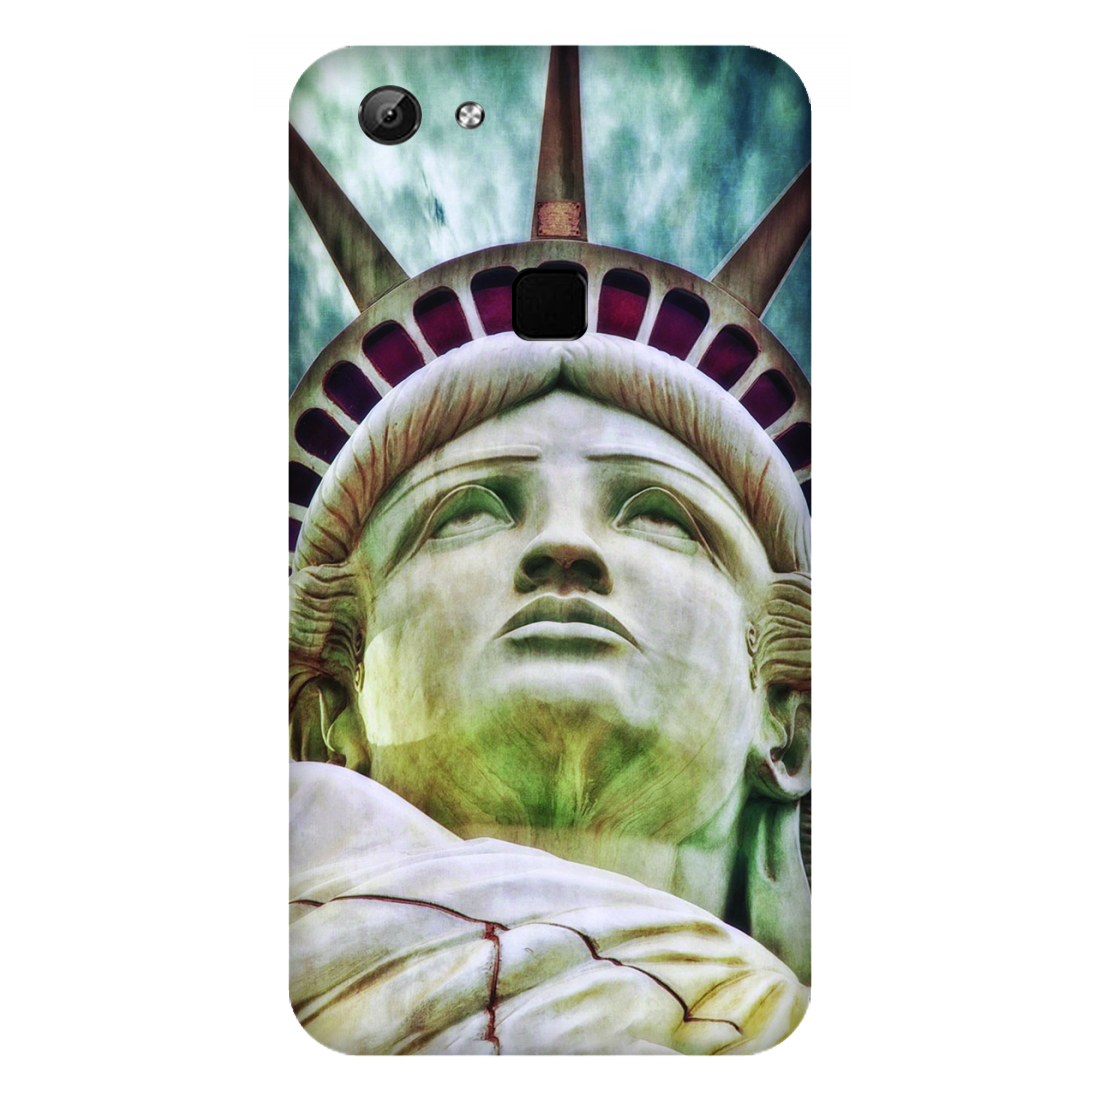 Statue of Liberty Case Vivo V7